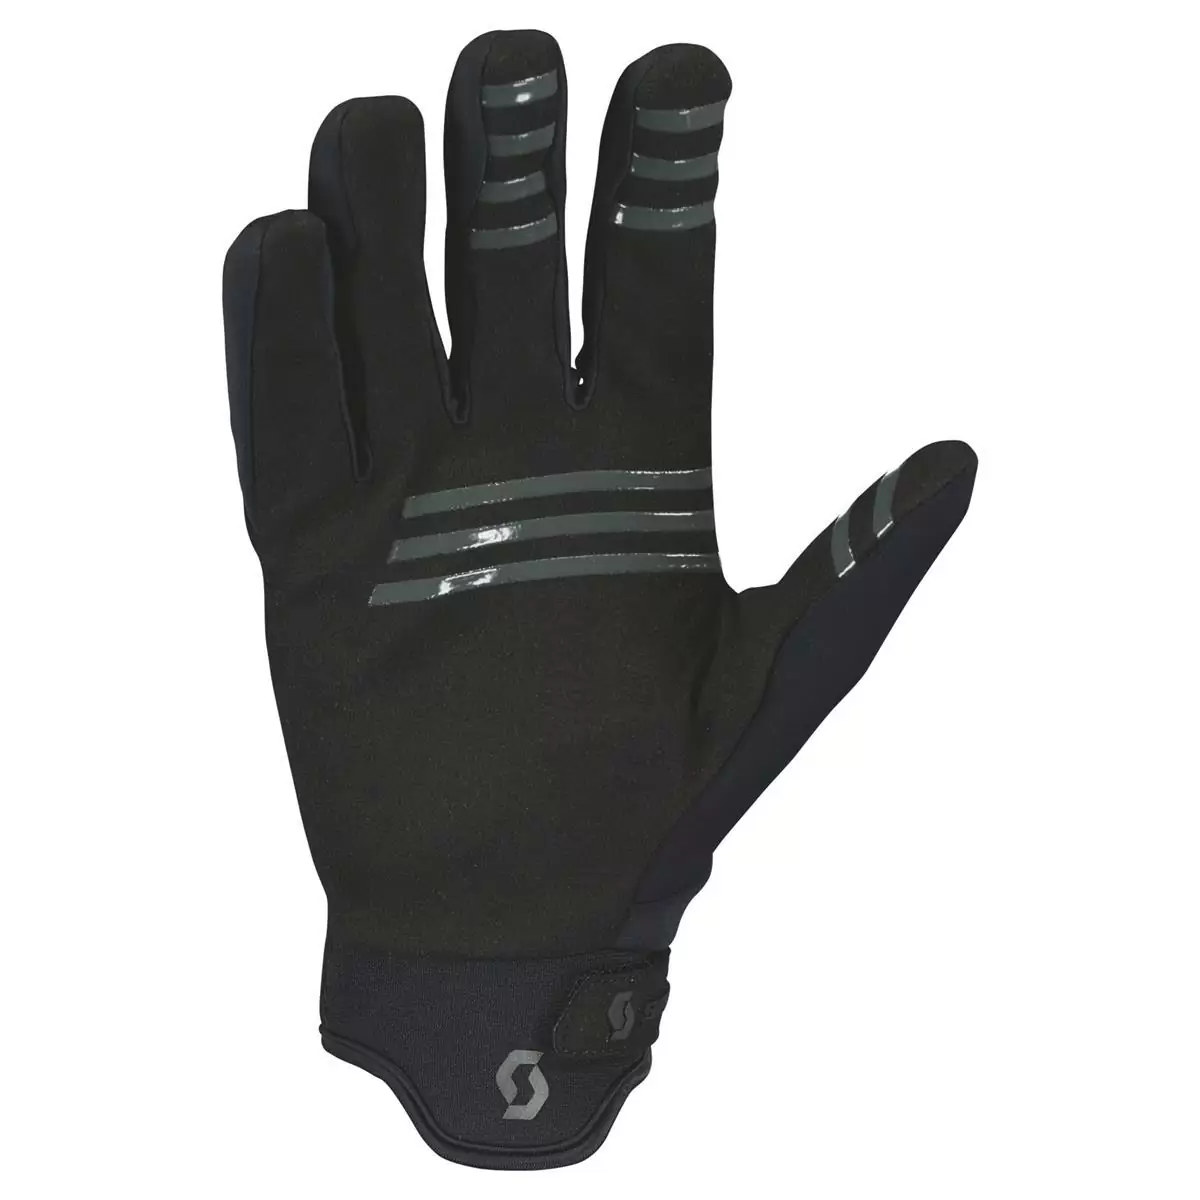 Neoride MTB Gloves Black Size M #2